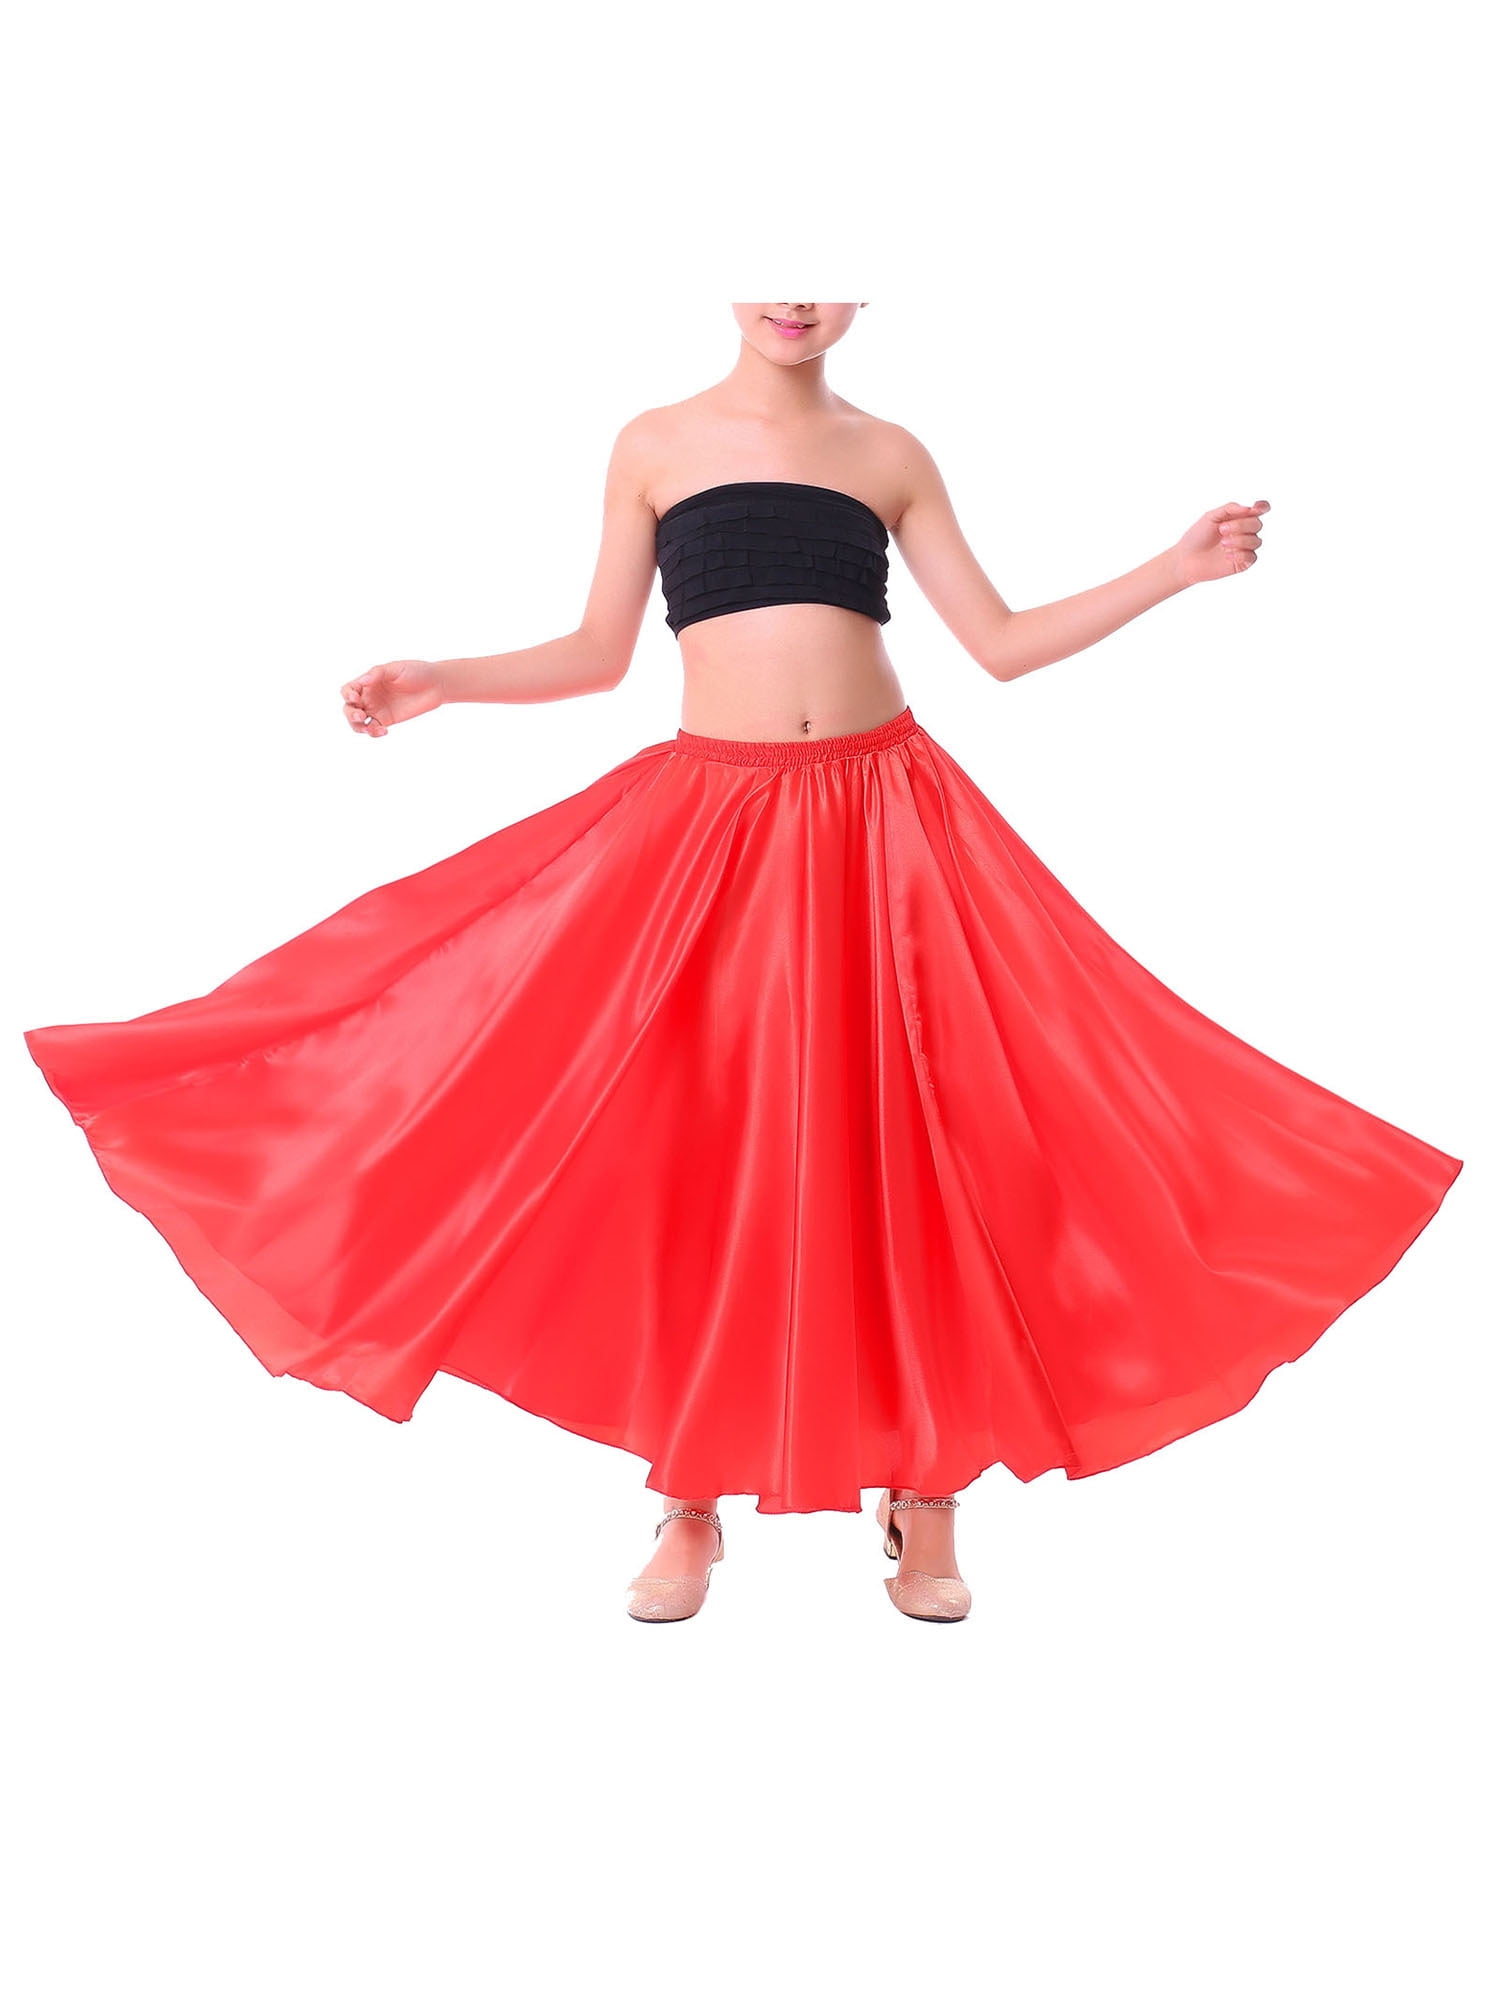 Aislor Girls Long Full Circle Dance Skirt Gypsy Latin Spanish Flamenco Skirt Ballroom Belly Dance Performance Costume A Red 11 12 7d4052ff efd3 4f1c 8d3c c25c246e67dd.a7f9c68a8ccb6d29b280b88f8f8a0c51